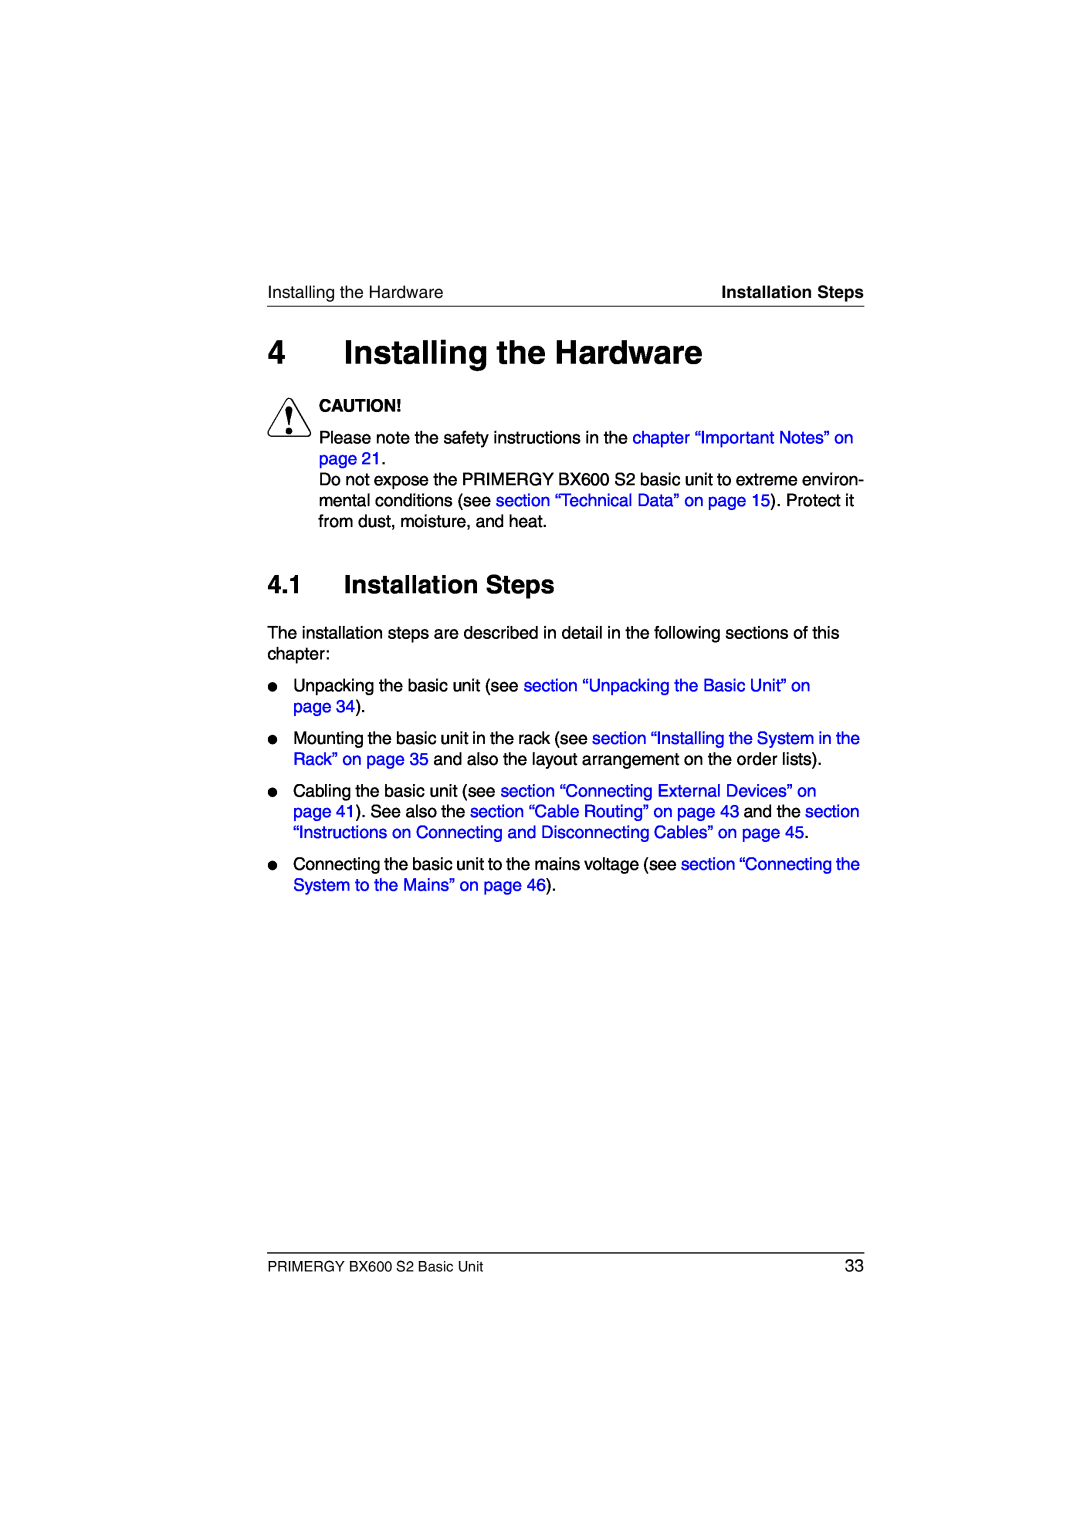 Fujitsu BX600 S2 manual Installing the Hardware, Installation Steps, V Caution 